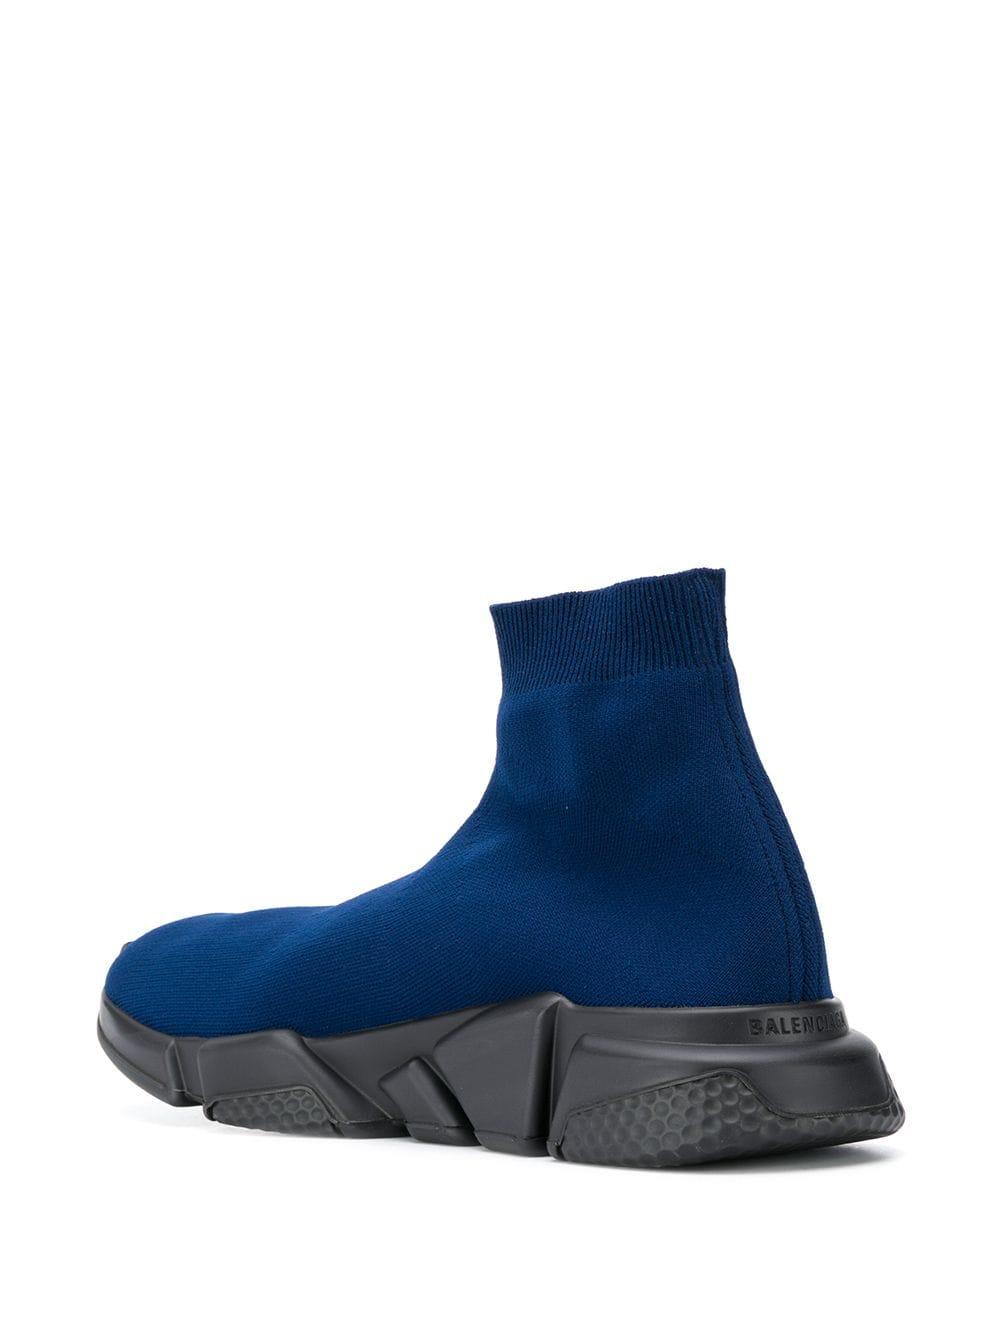 Balenciaga Rubber Speed Knit Sneakers in Blue for Men - Lyst